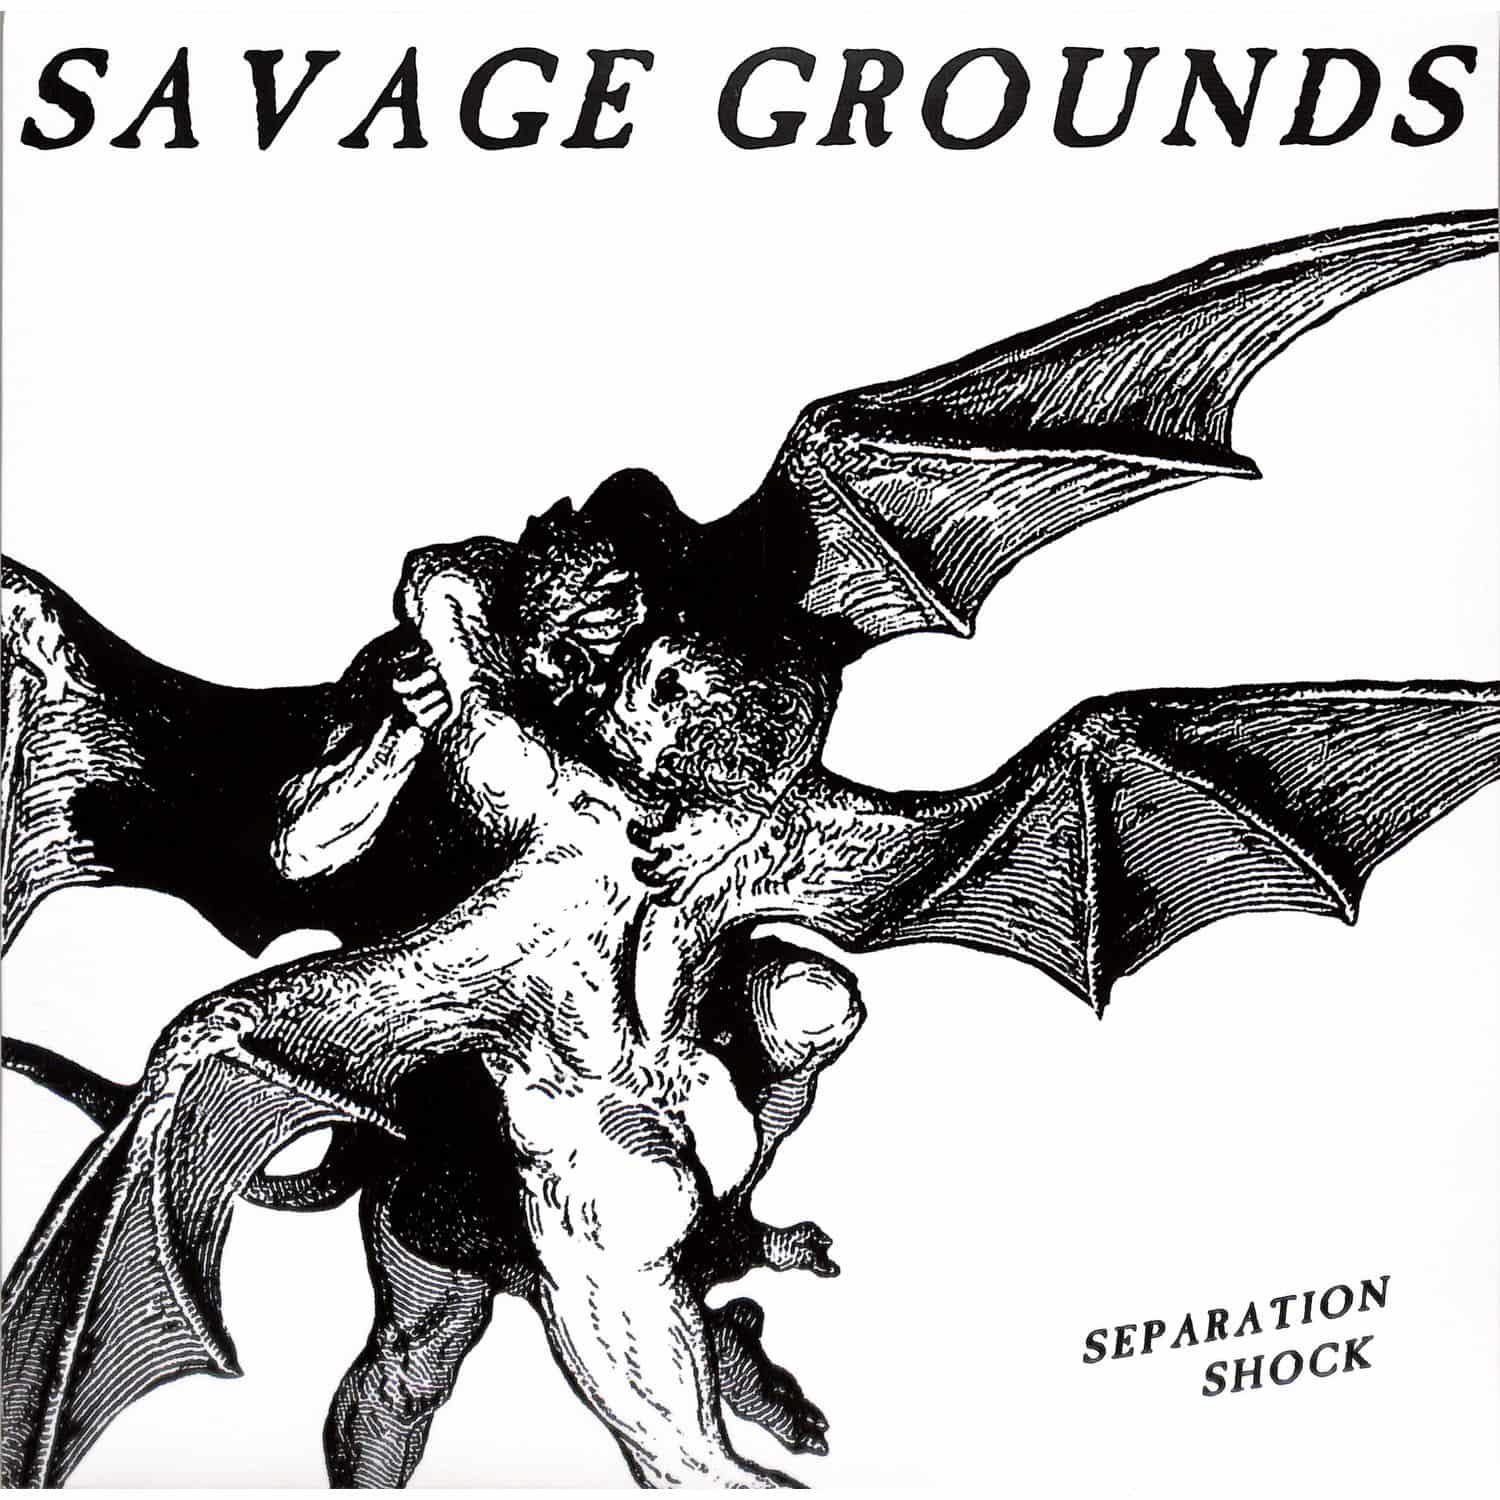 Savage Grounds - SEPARATION SHOCK EP